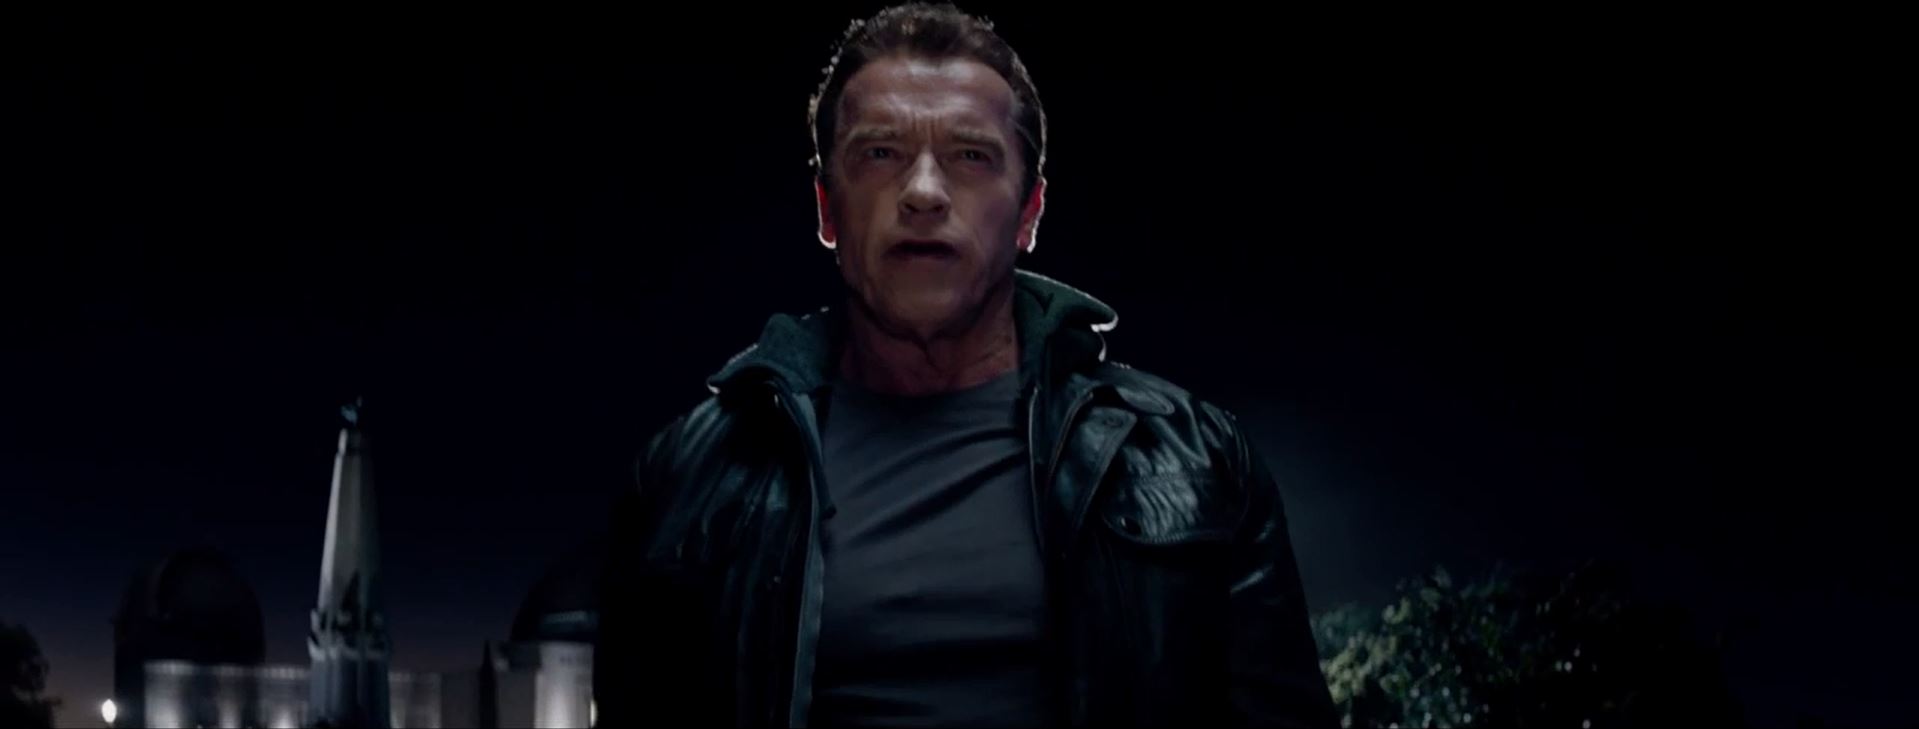 Terminator: Genisys Trailer Released - SciFiEmpire.net